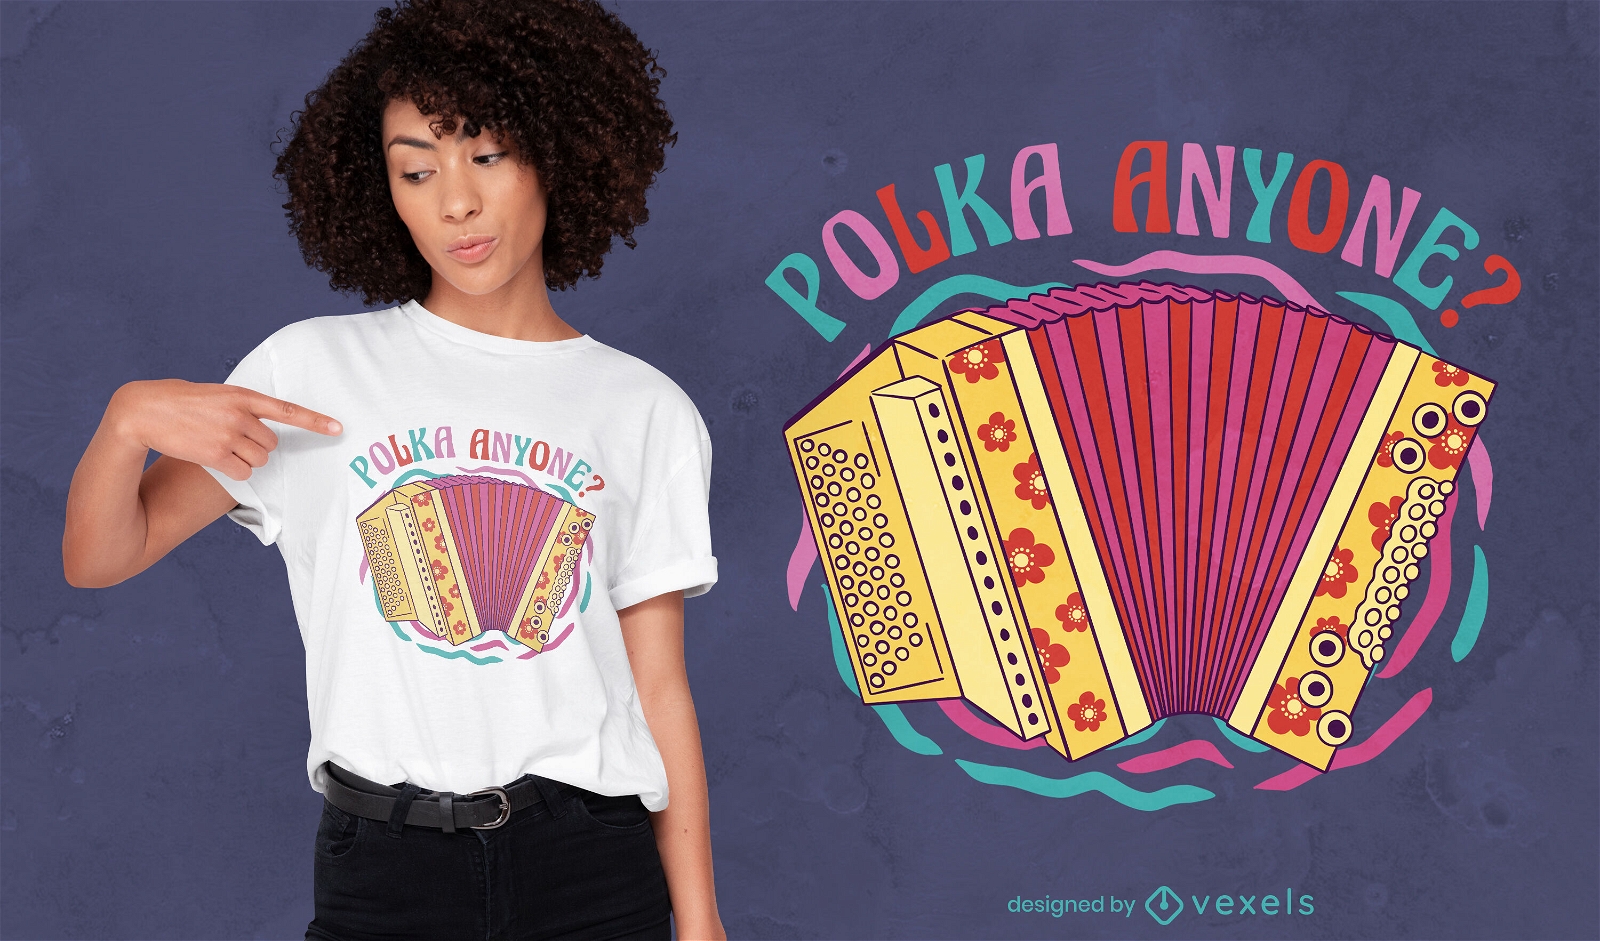 Polka anyone t-shirt design